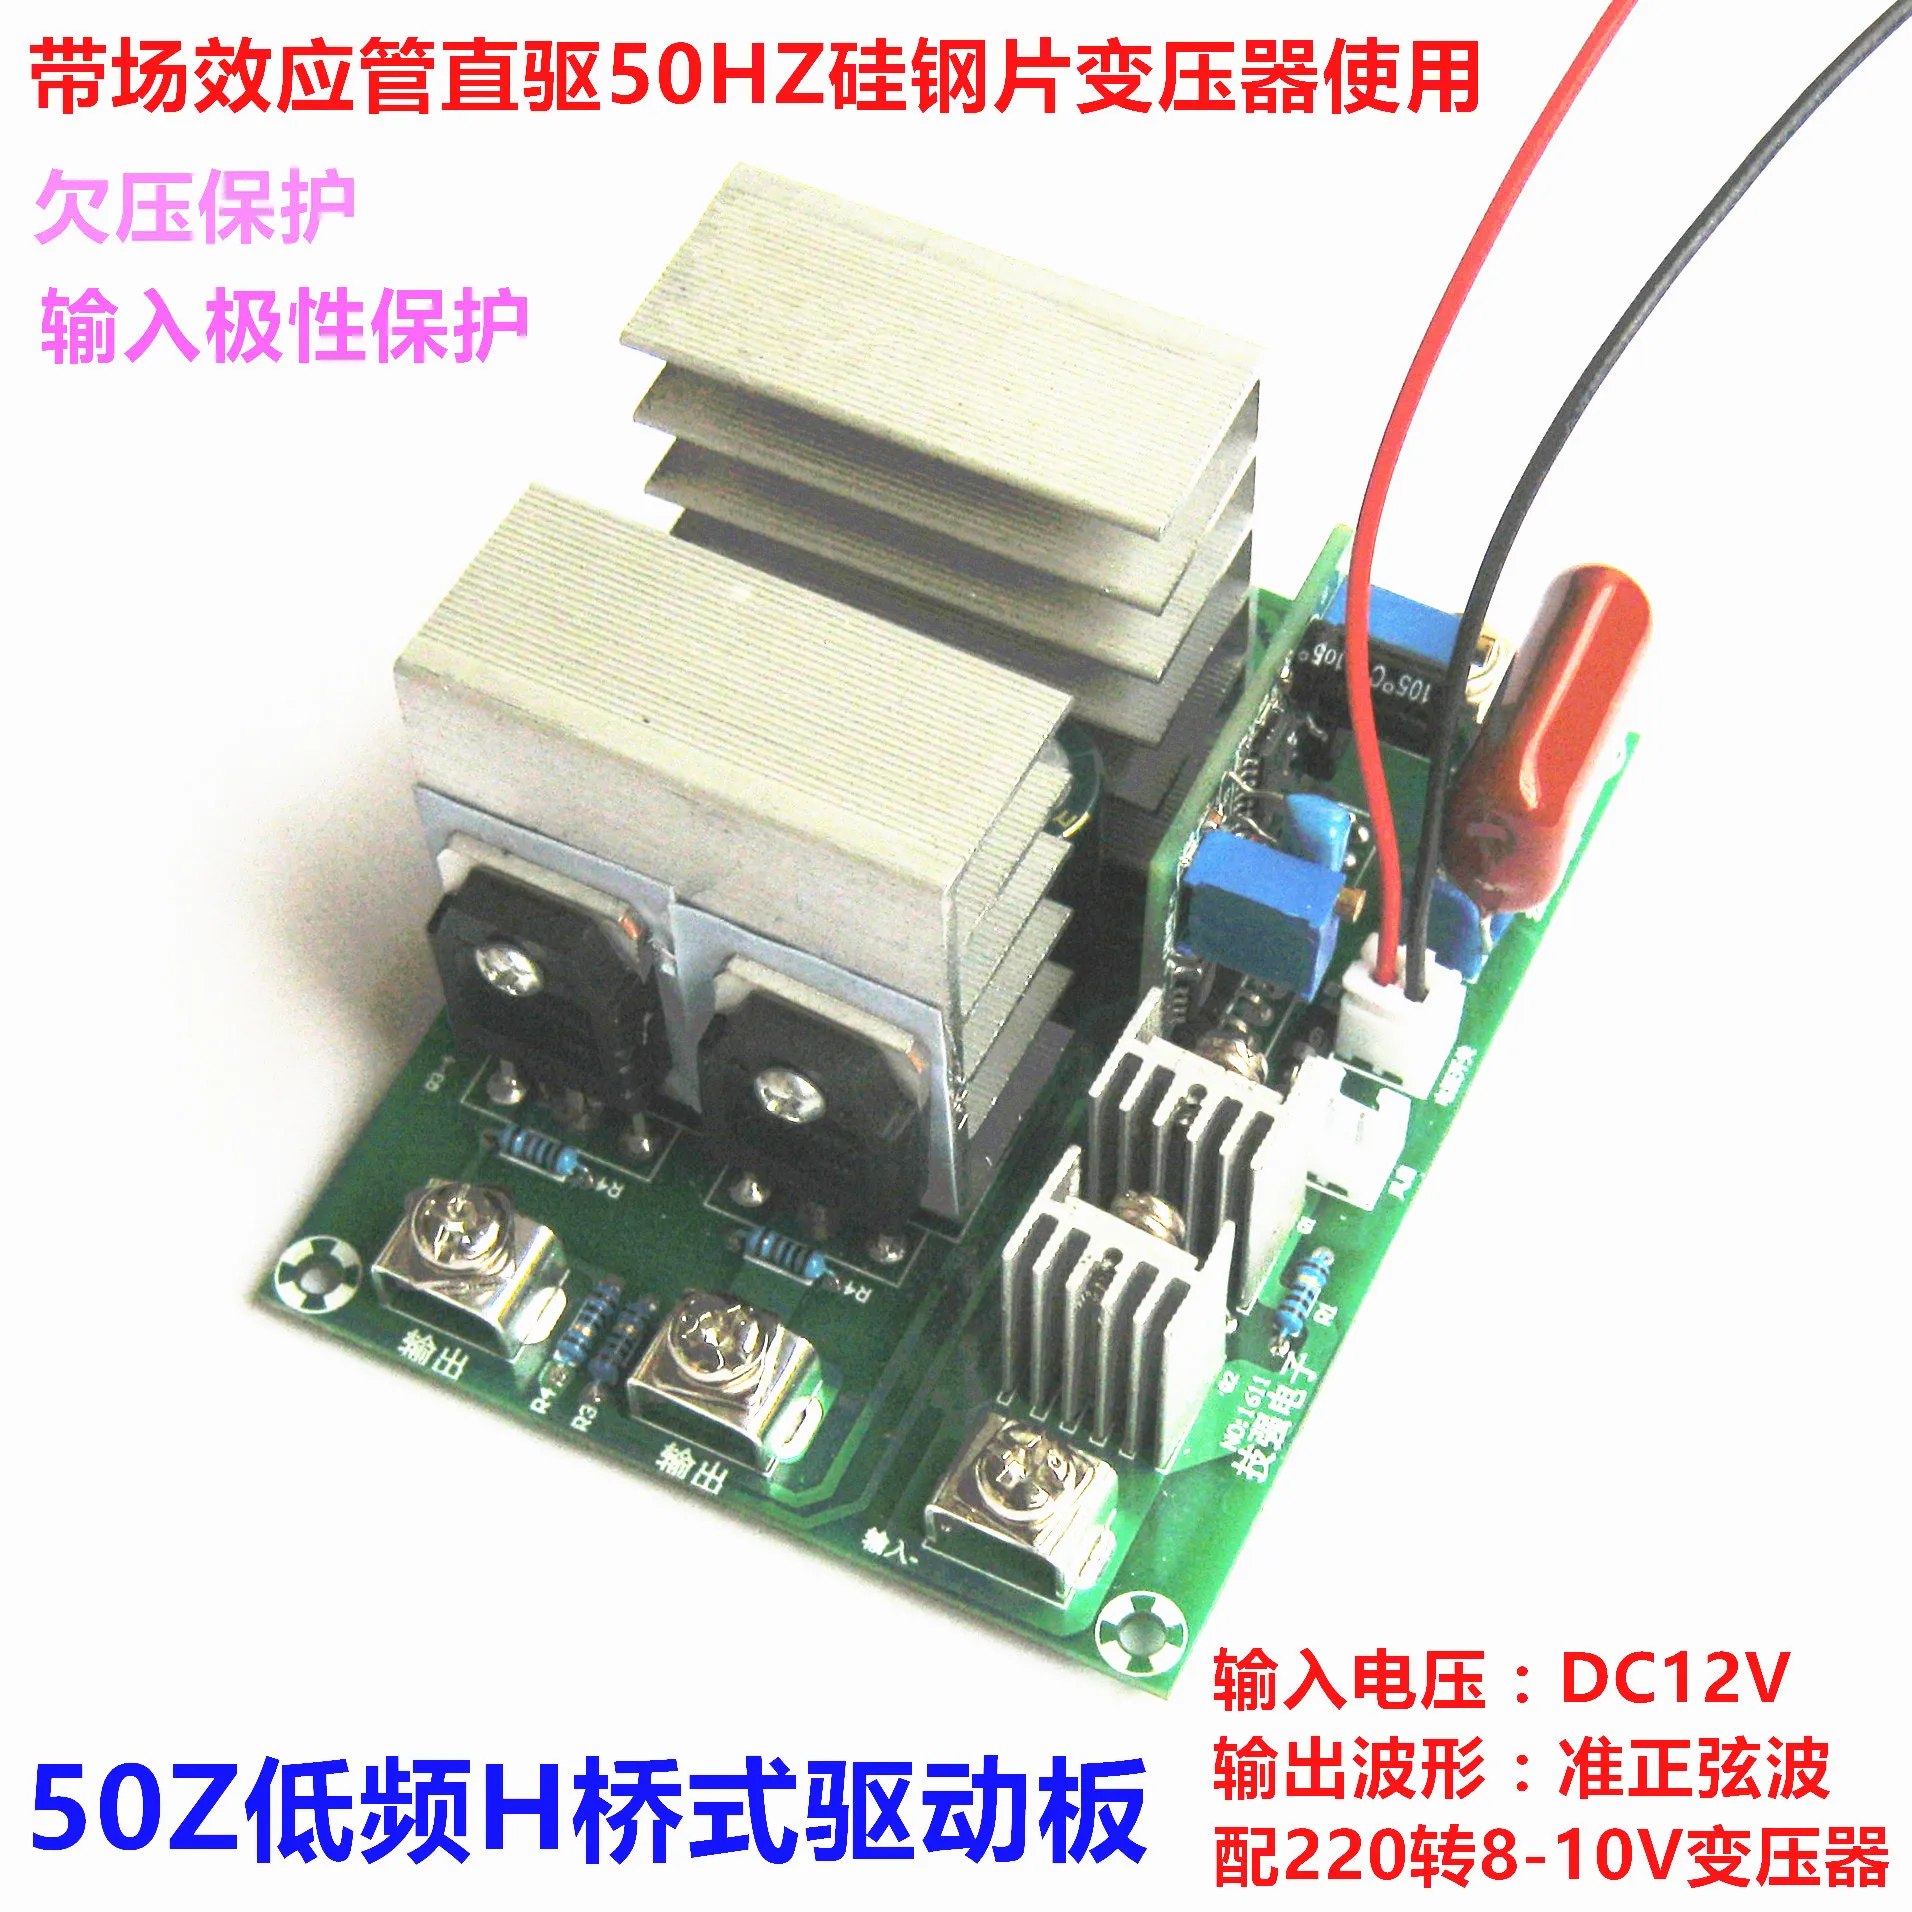 

Single 12V Boost 220V Transformer with Bridge Type 50HZ Inverter Drive Board 500W with Stabilized Quasi-sine Wave